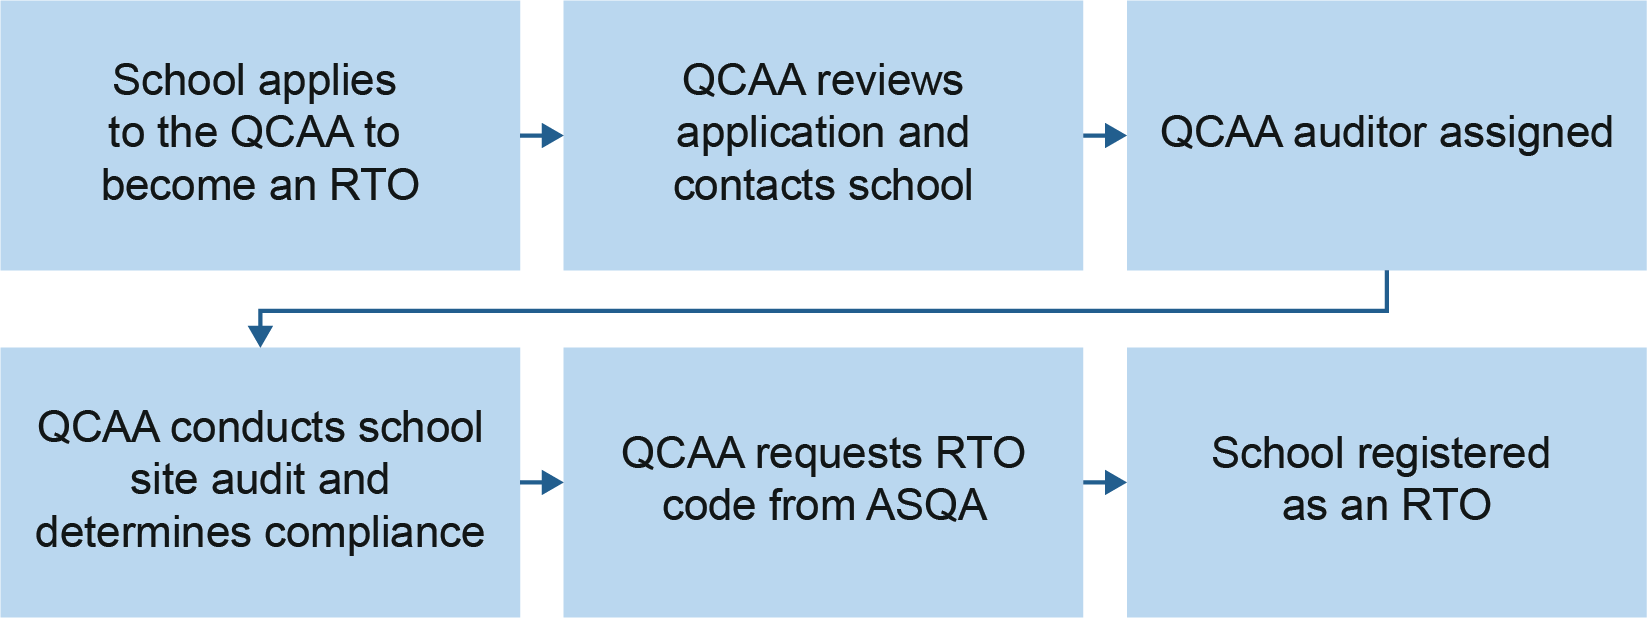 School RTO registration process